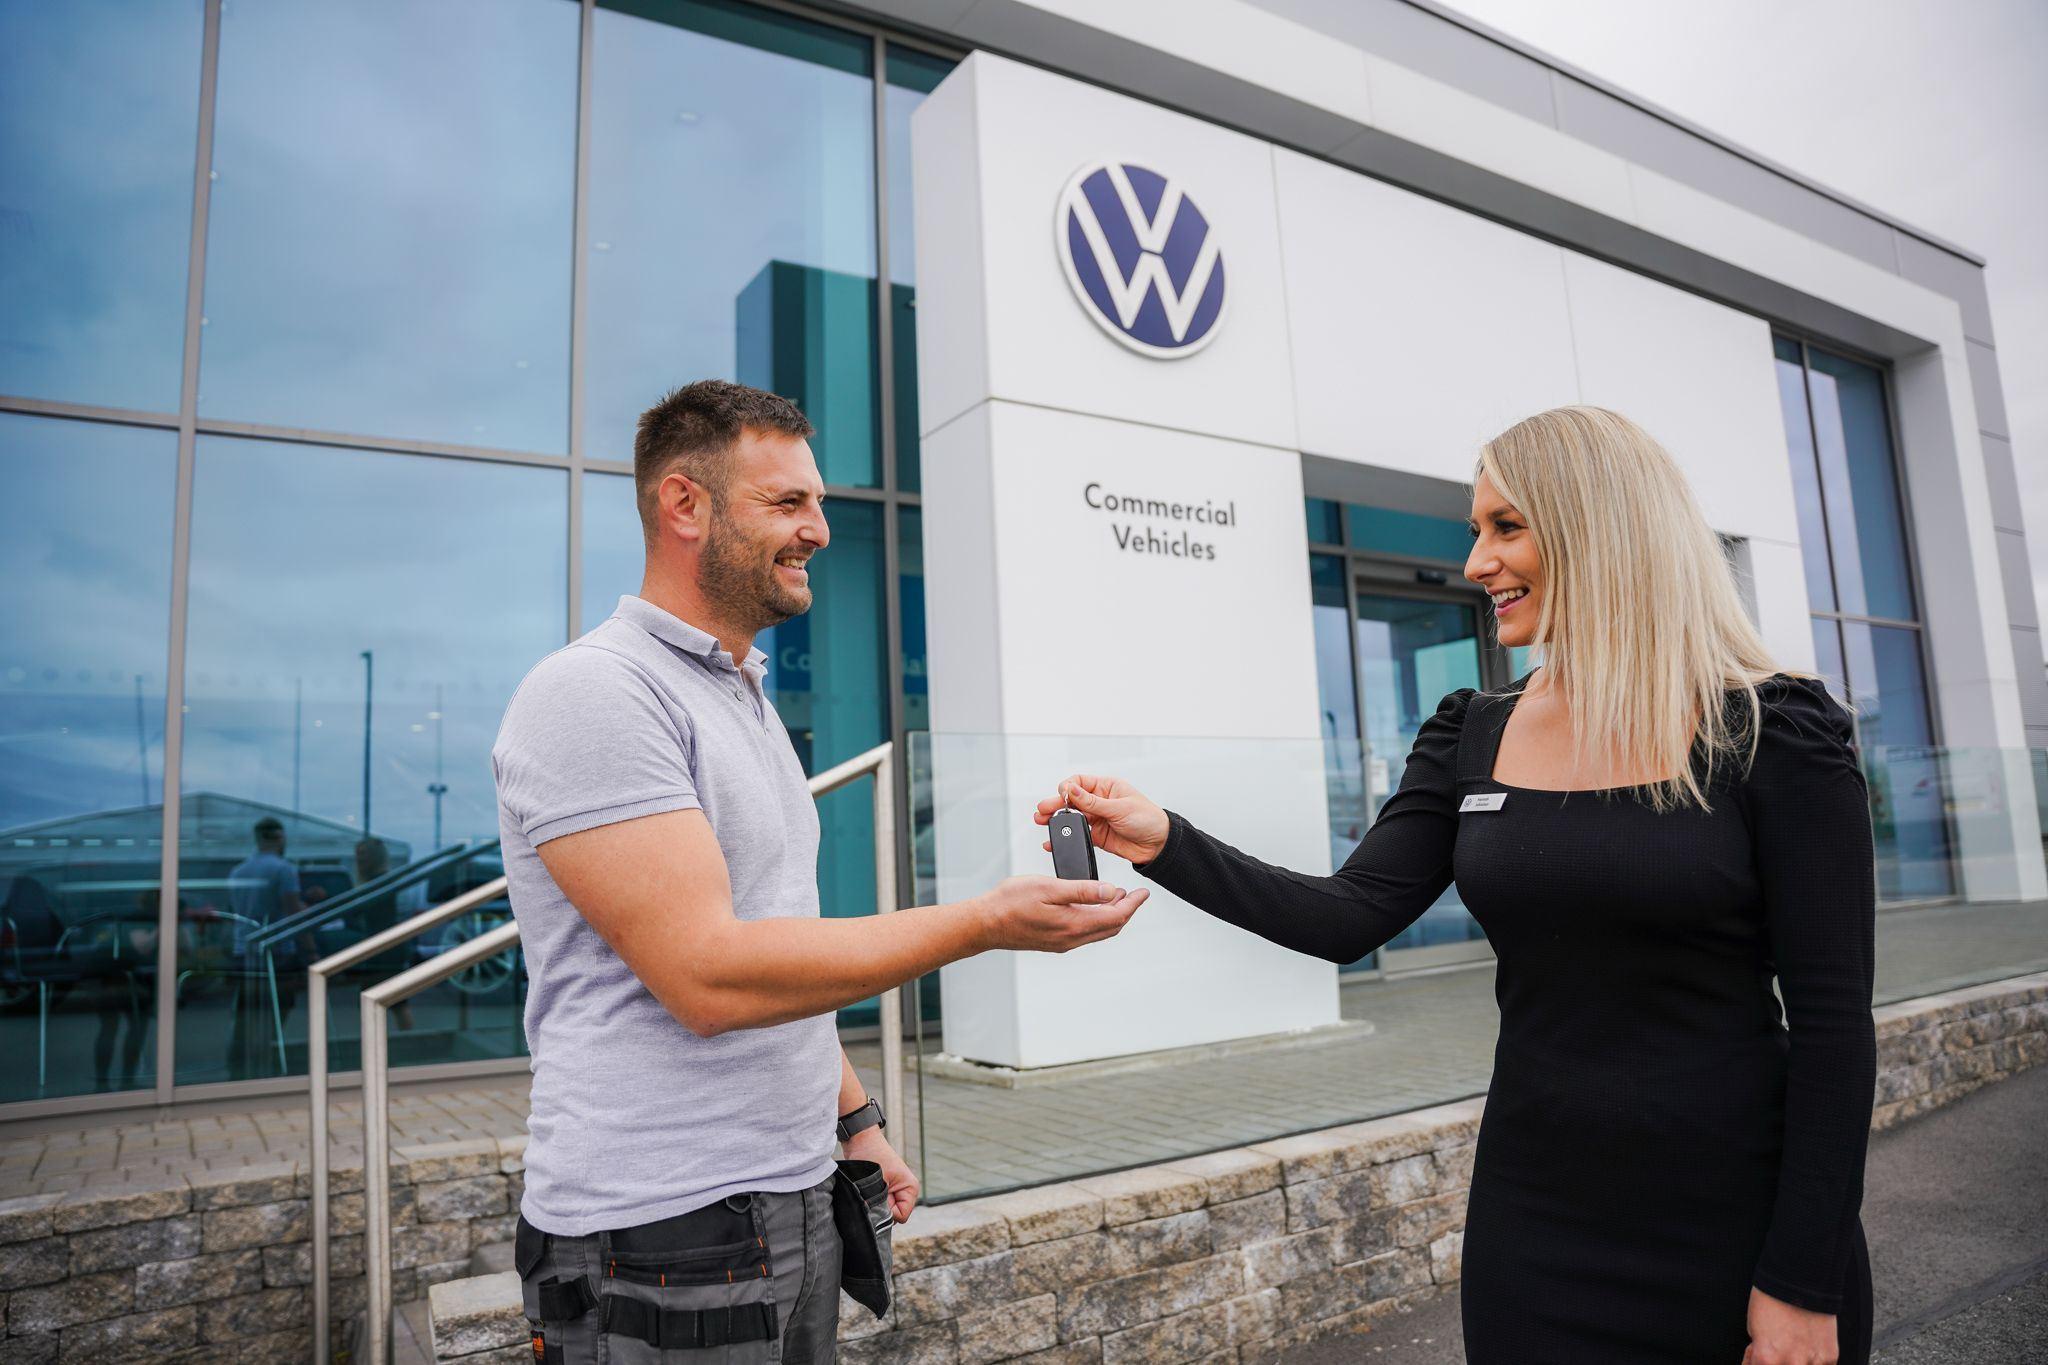 Volkswagen Service Advisor hands over keys to customer after successful service